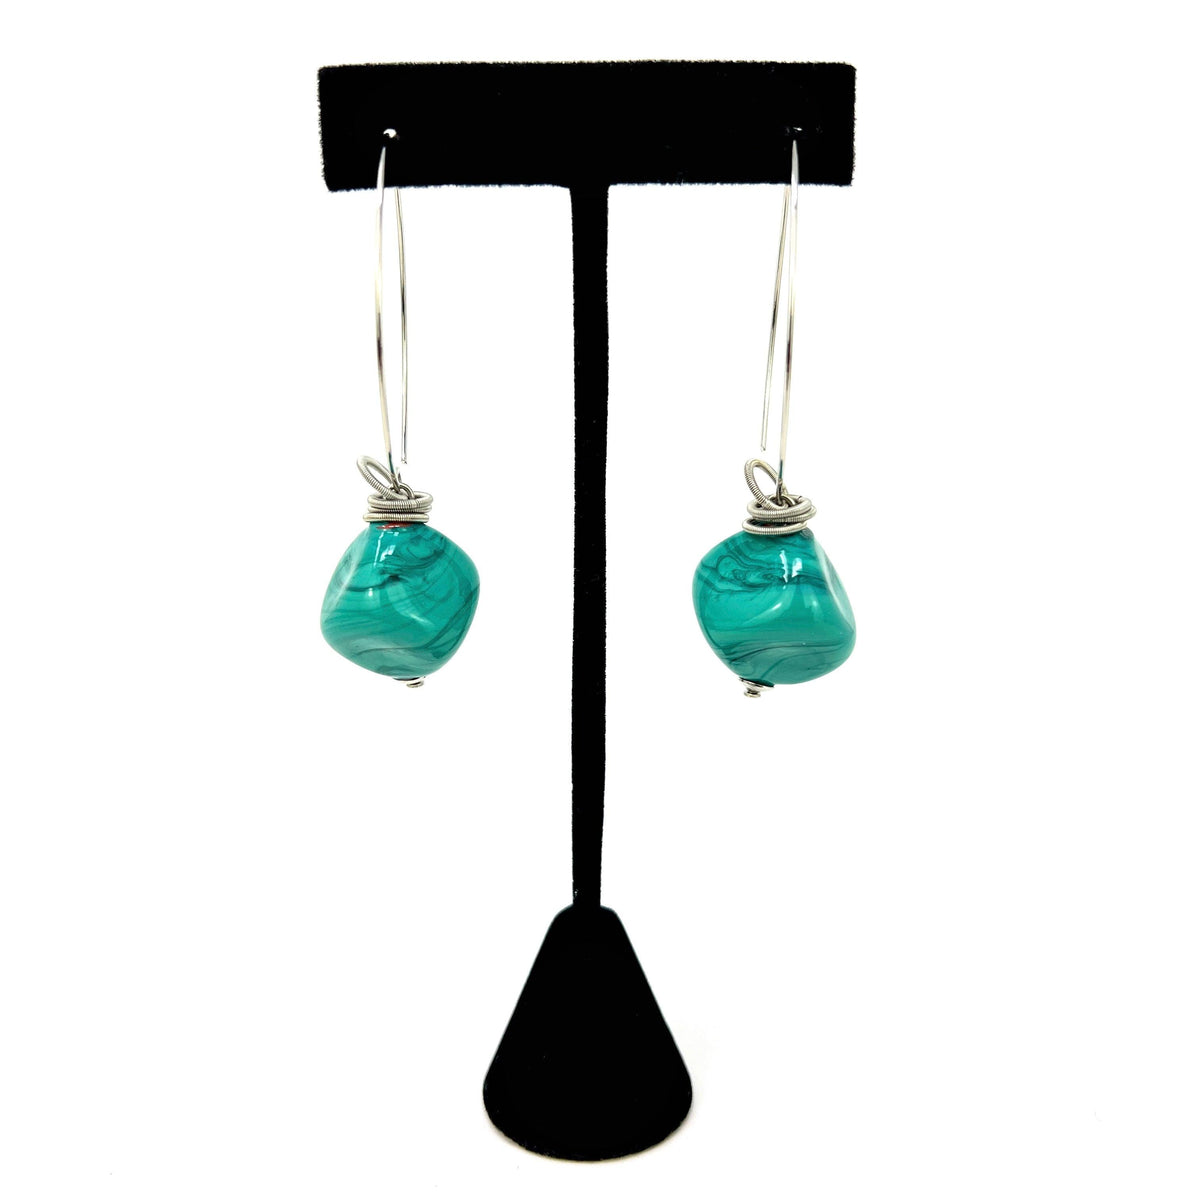 Boop Earrings, Murano Glass Bead and Hoop at MyItalianDecor